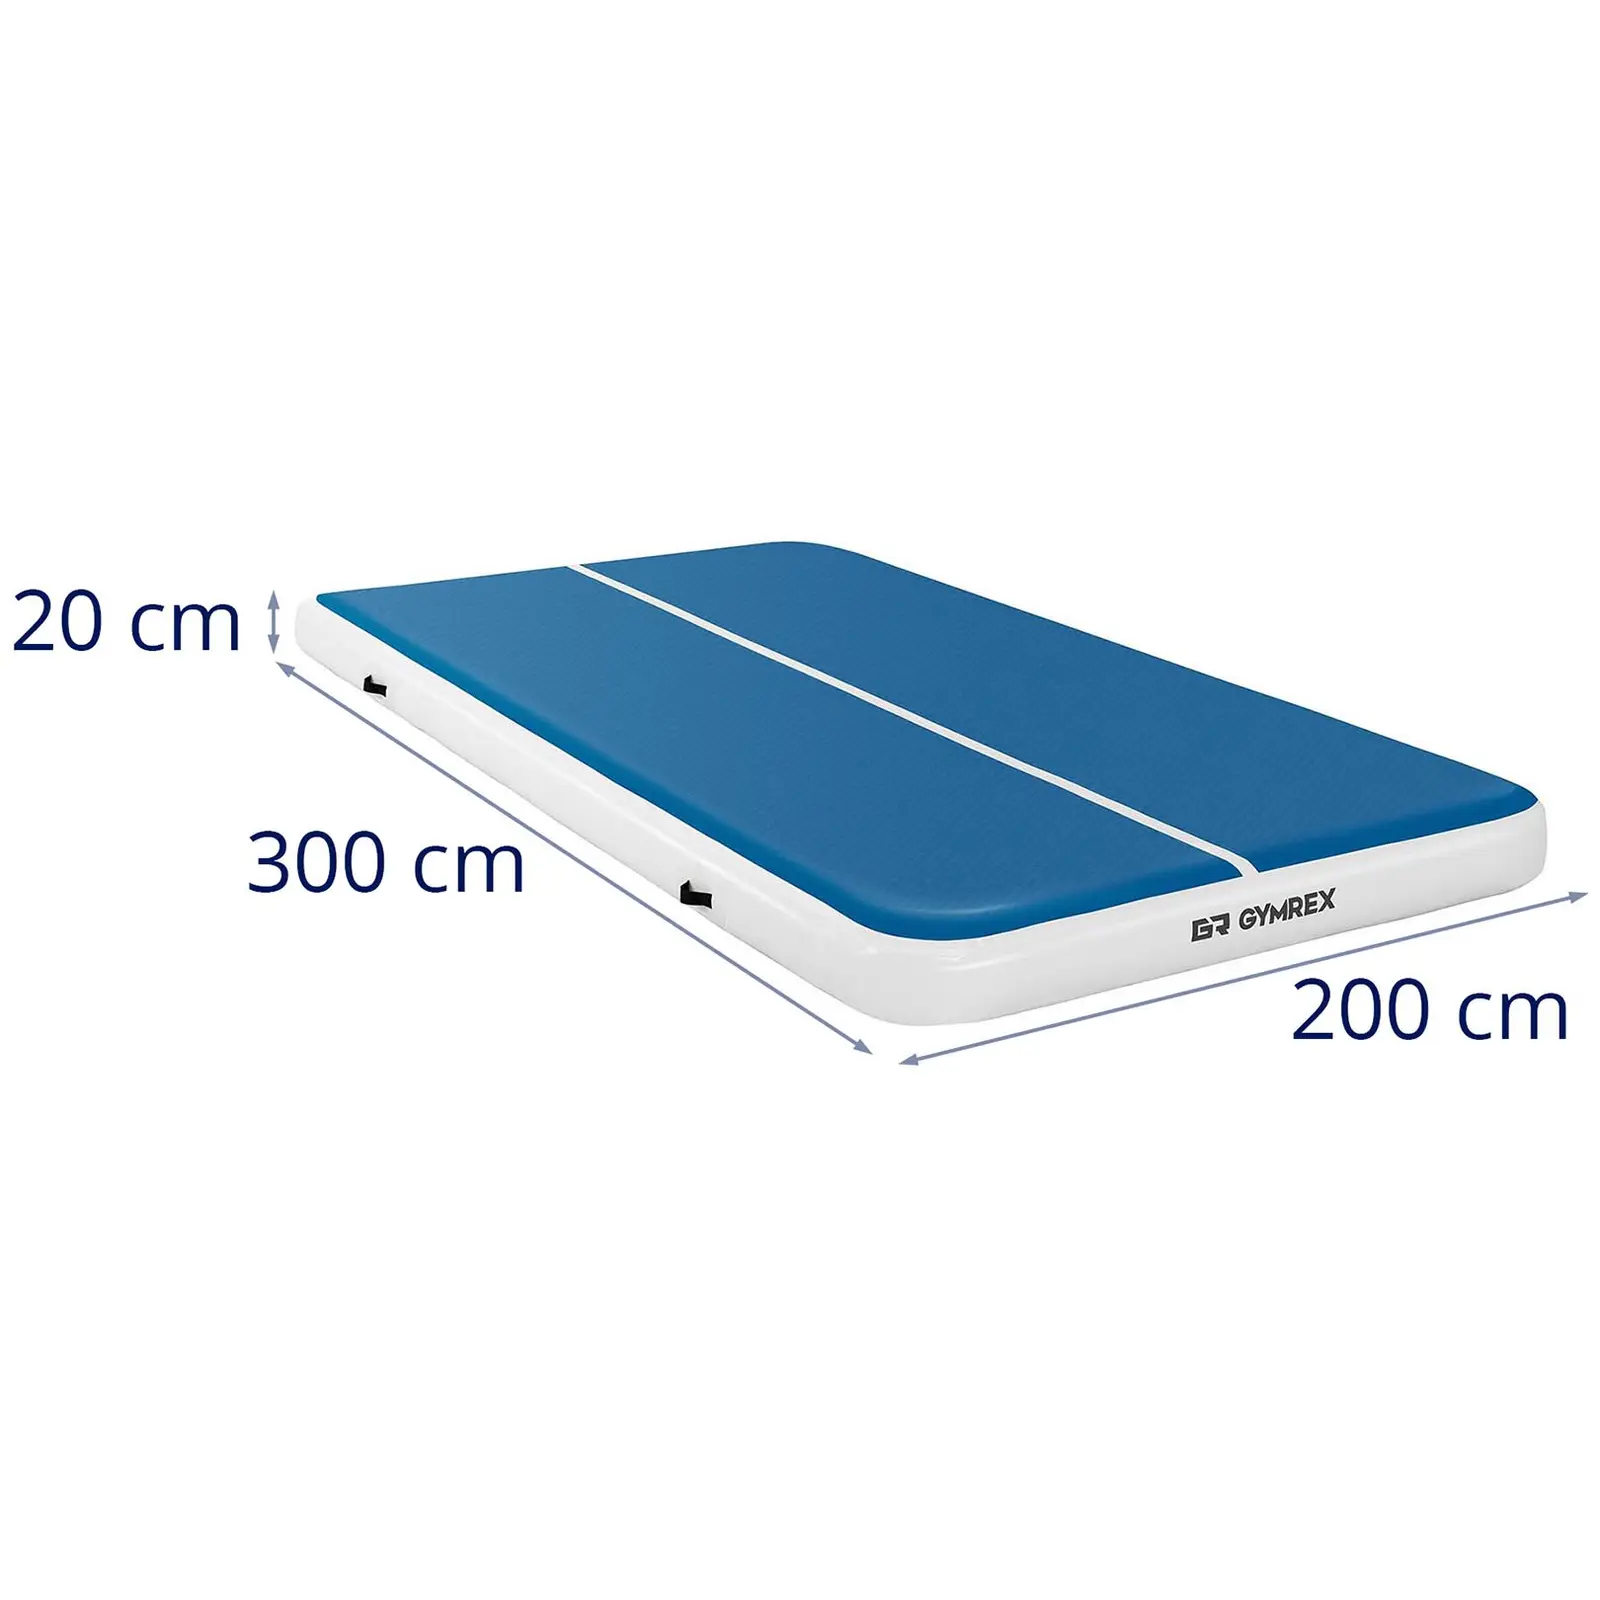 Aufblasbare Turnmatte - 300 x 200 x 20 cm - 300 kg - blau/weiß